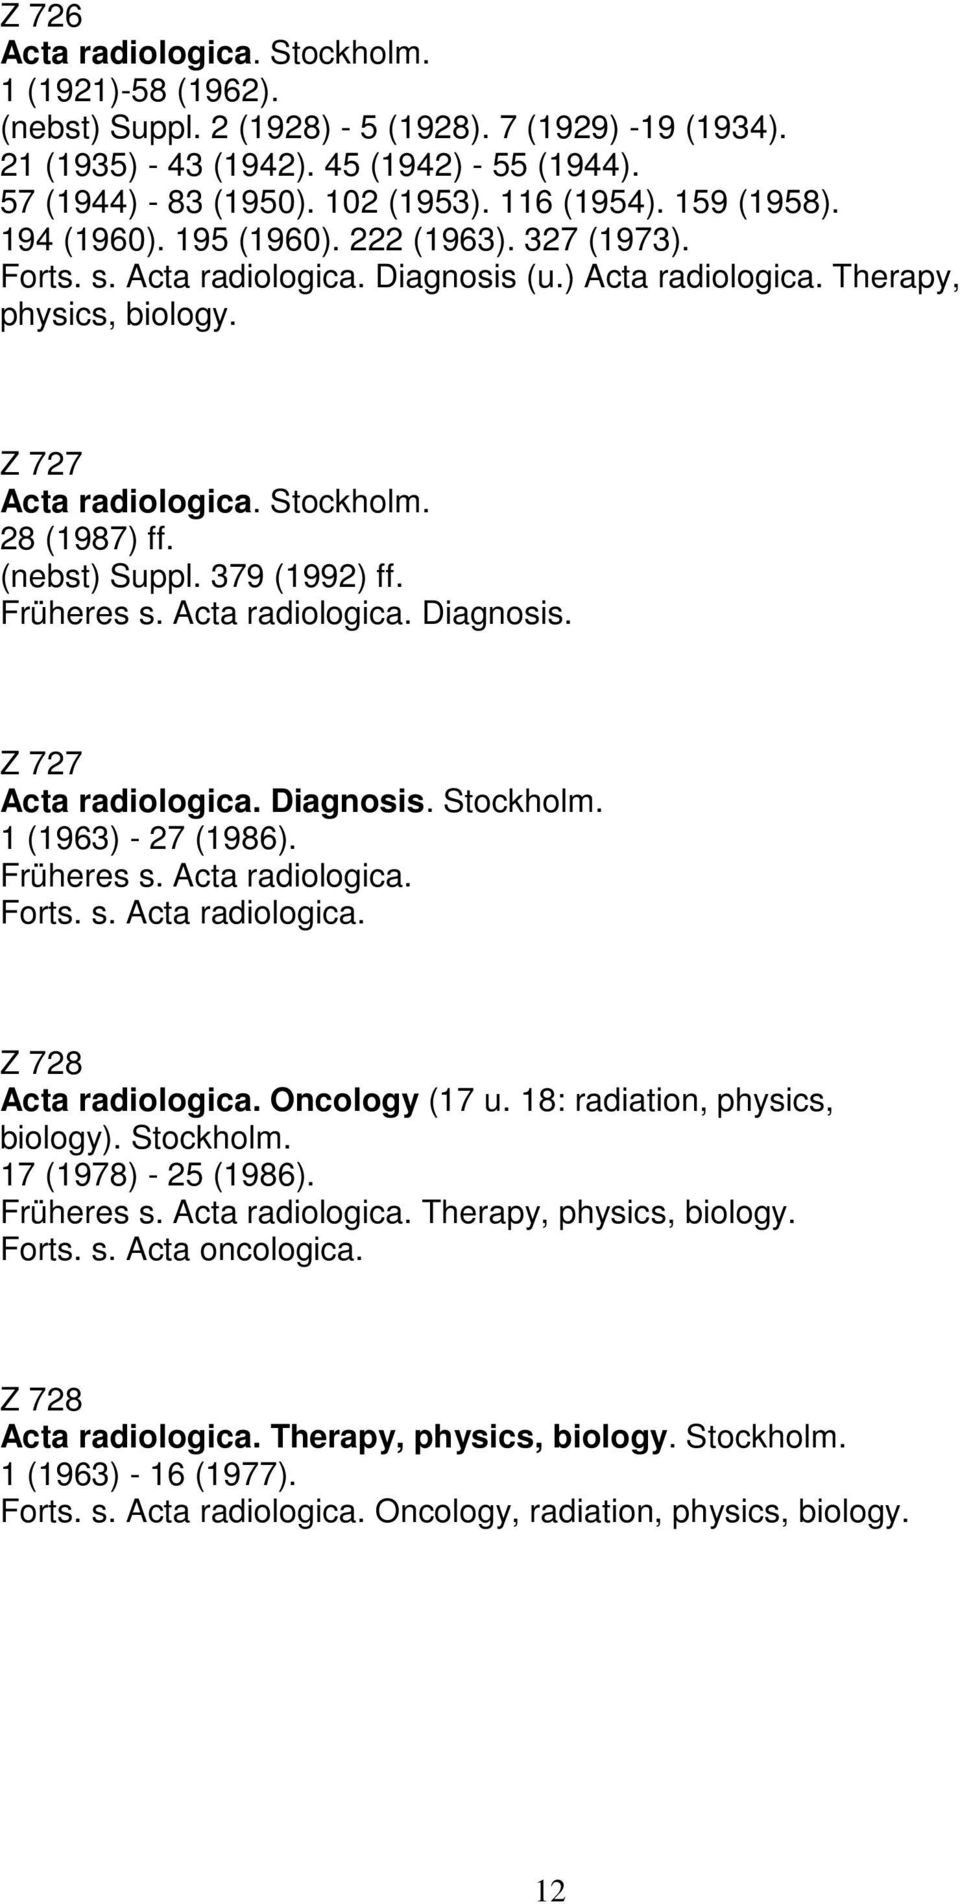 379 (1992) ff. Früheres s. Acta radiologica. Diagnosis. Z 727 Acta radiologica. Diagnosis. Stockholm. 1 (1963) - 27 (1986). Früheres s. Acta radiologica. Forts. s. Acta radiologica. Z 728 Acta radiologica.